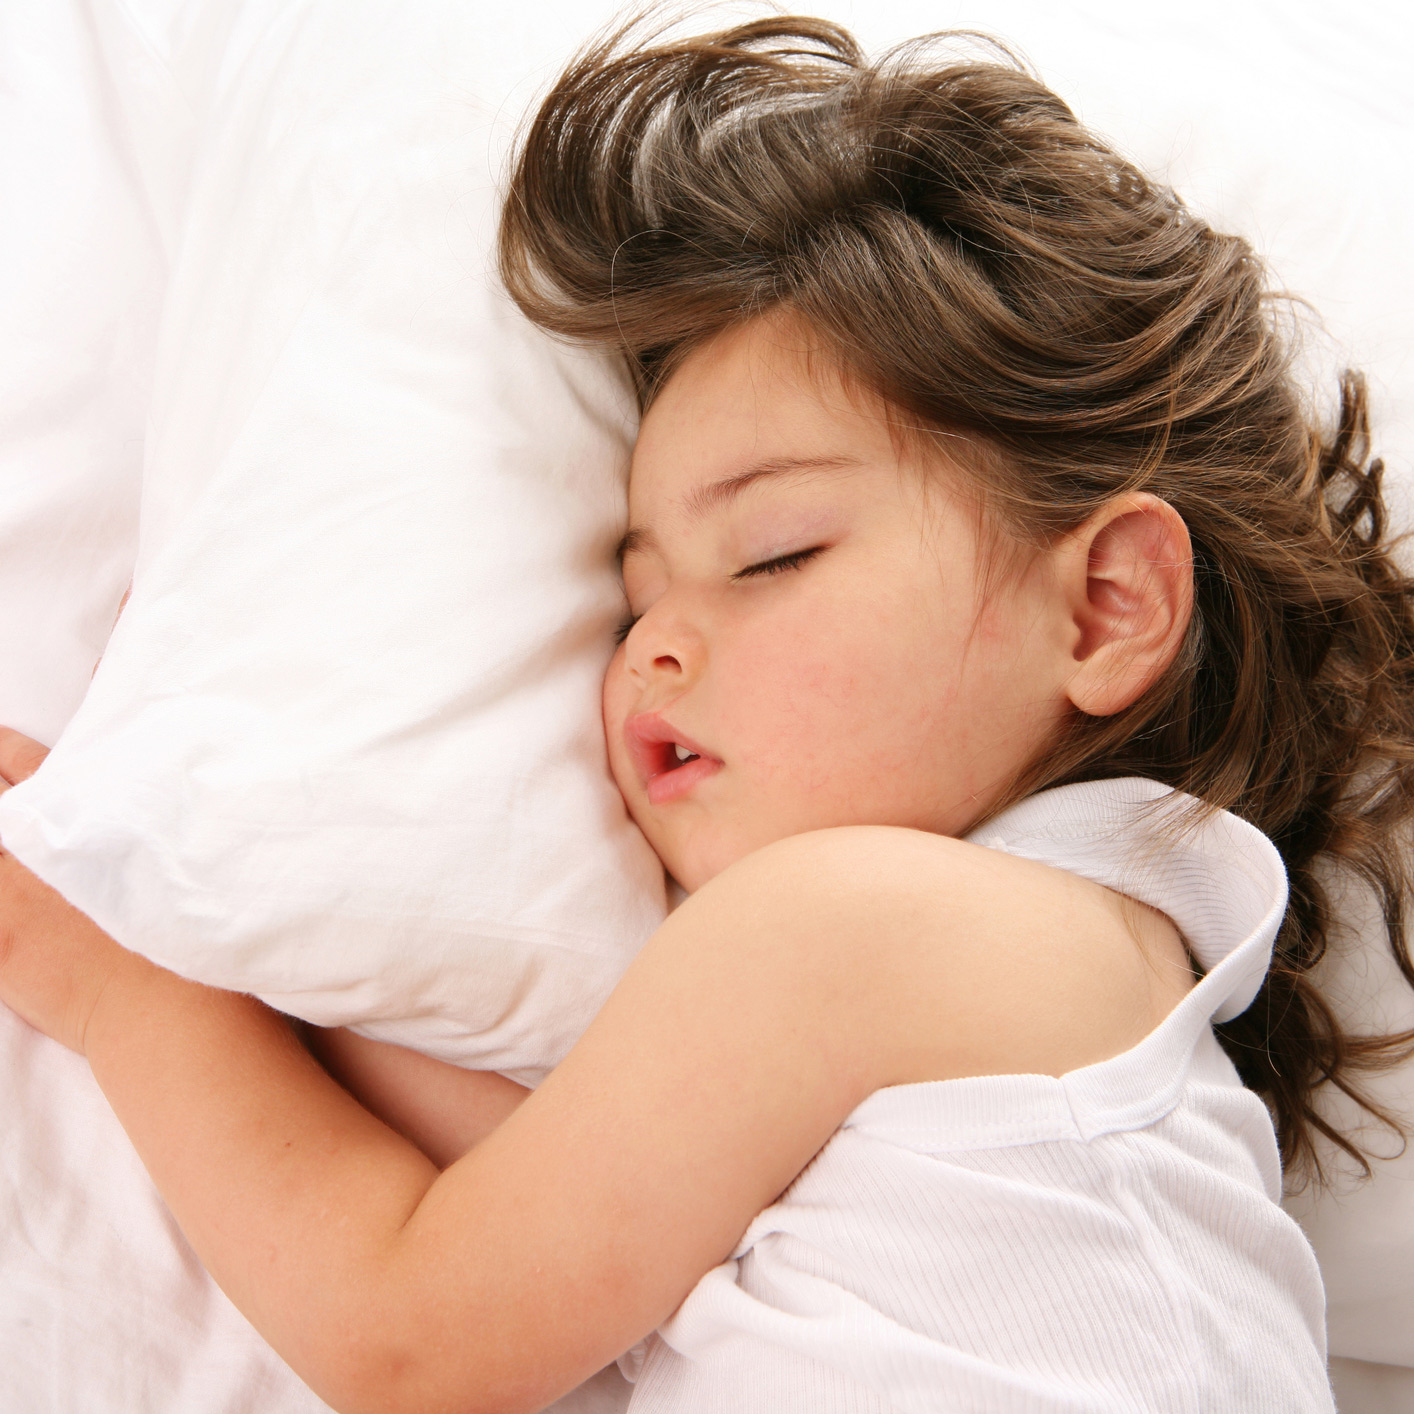 Getting kids to sleep during daylight